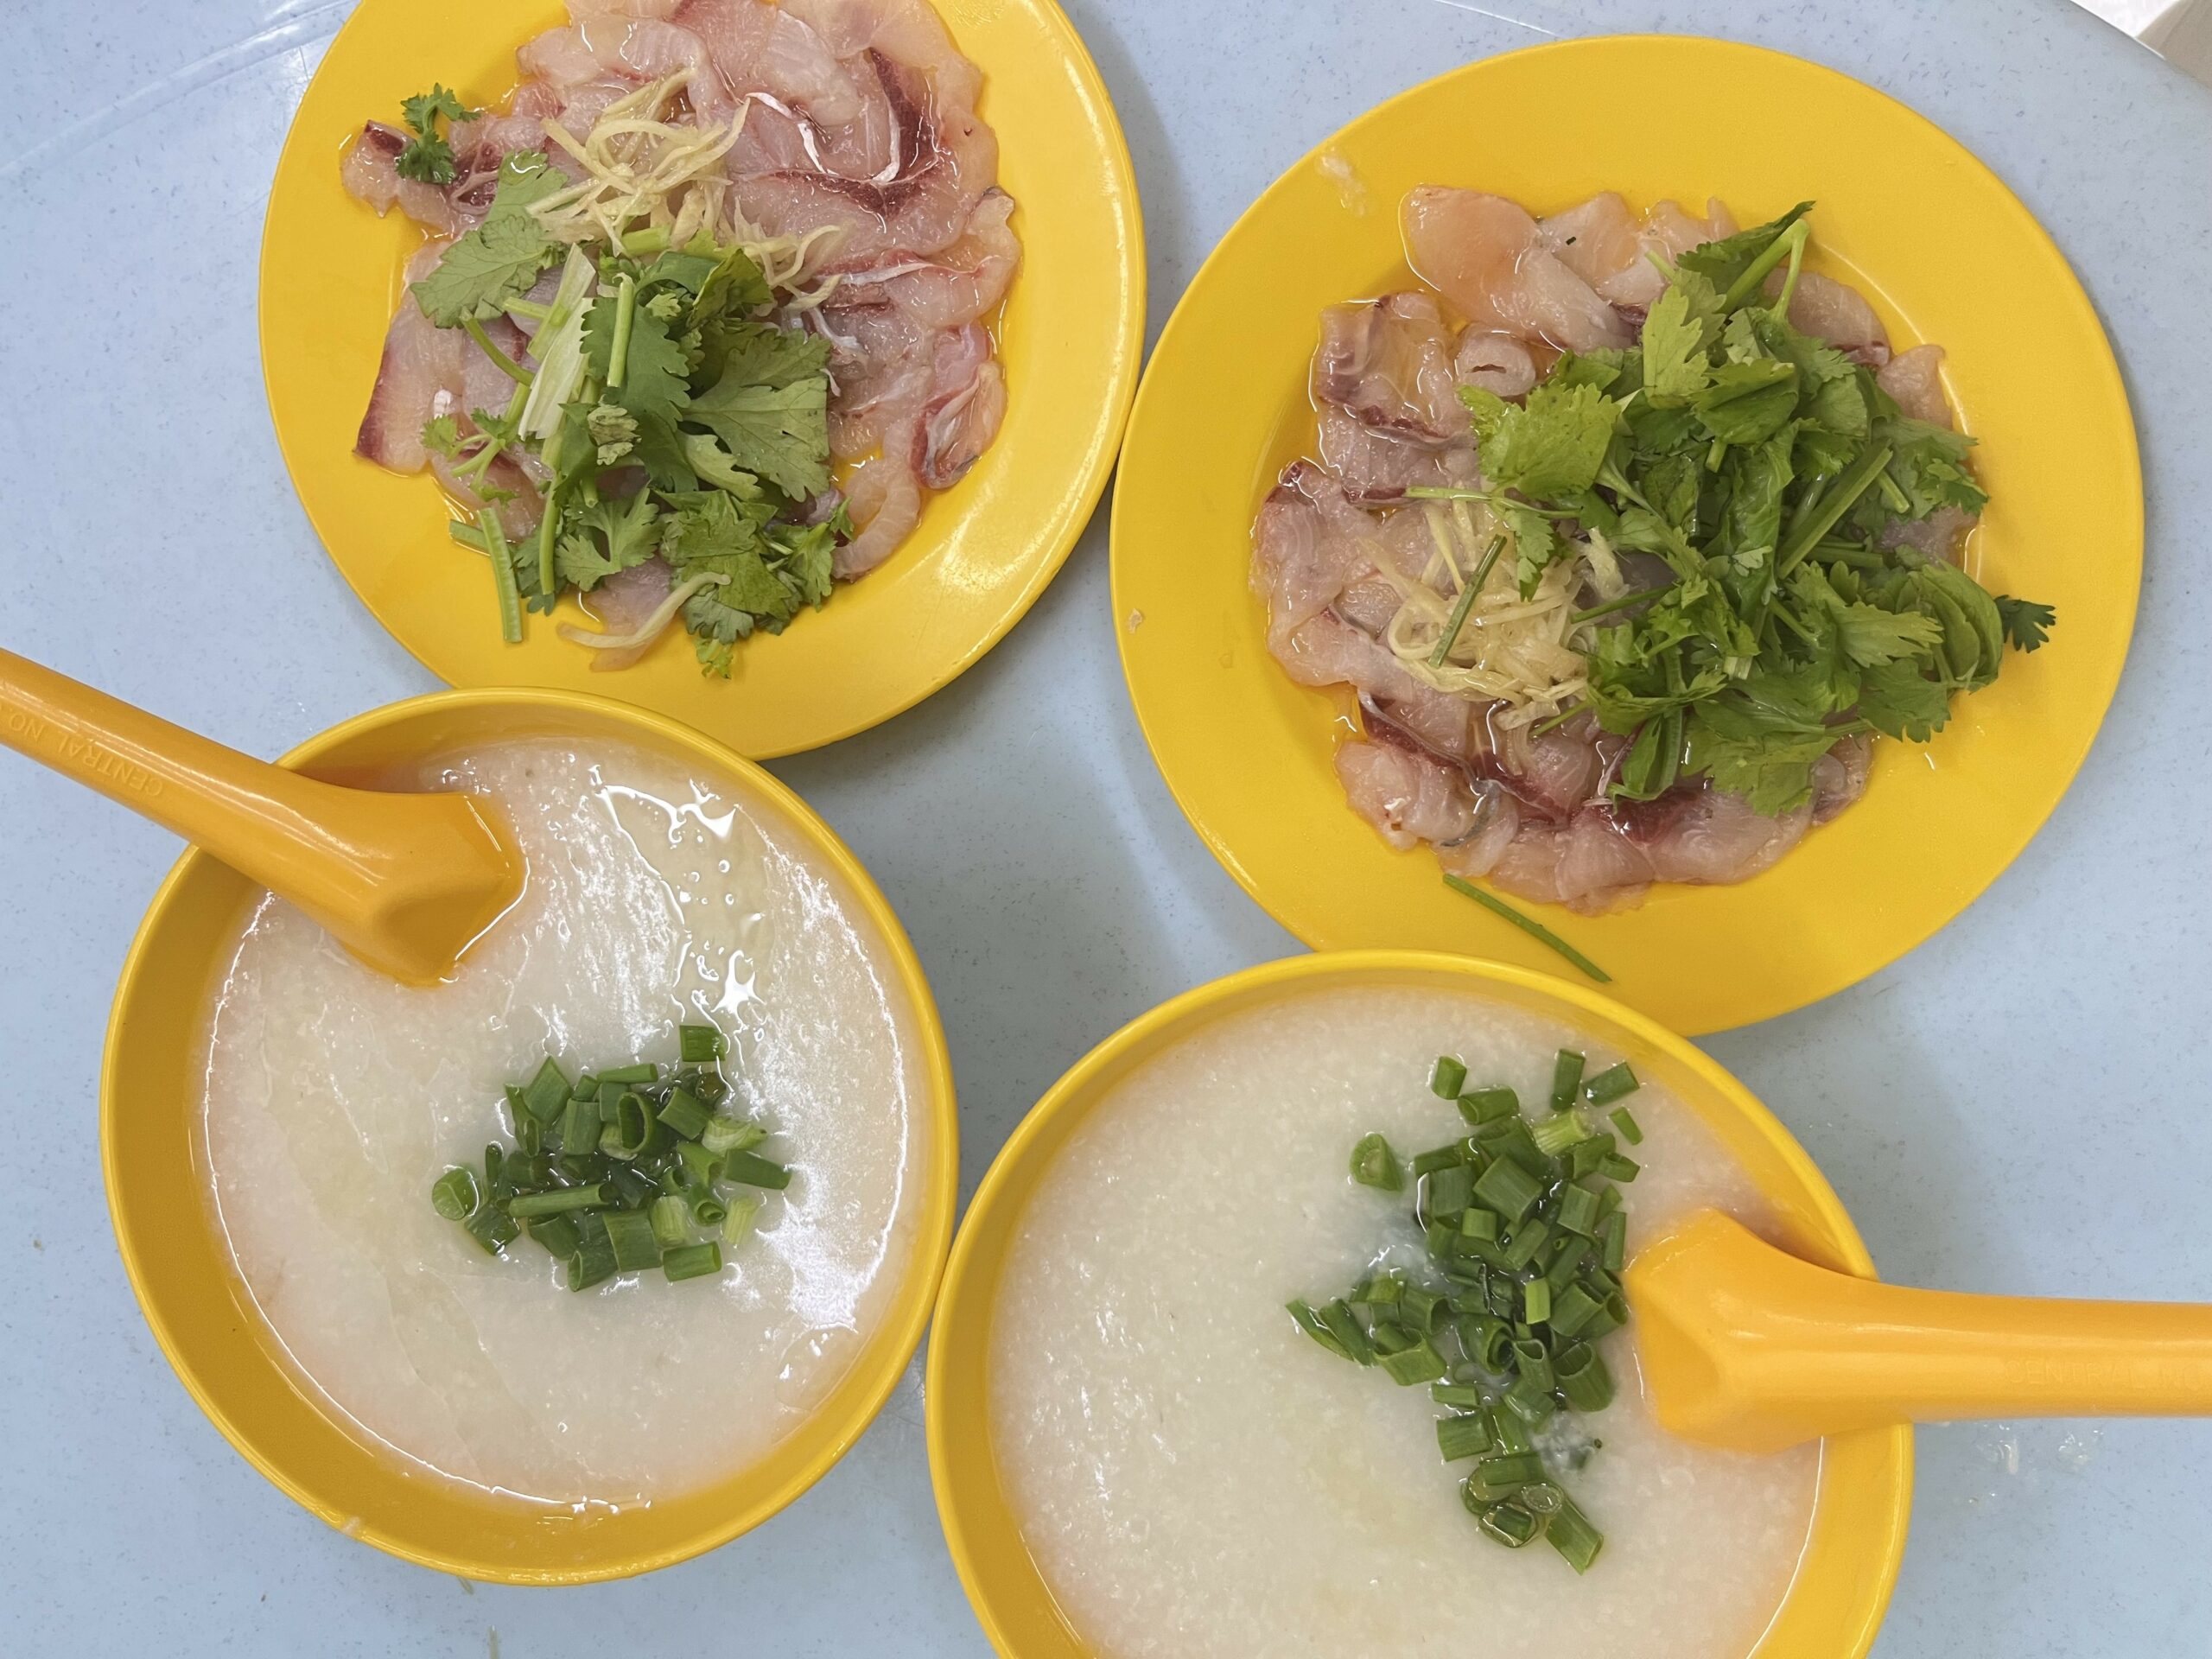 Petaling Street food - Hon Kee porridge